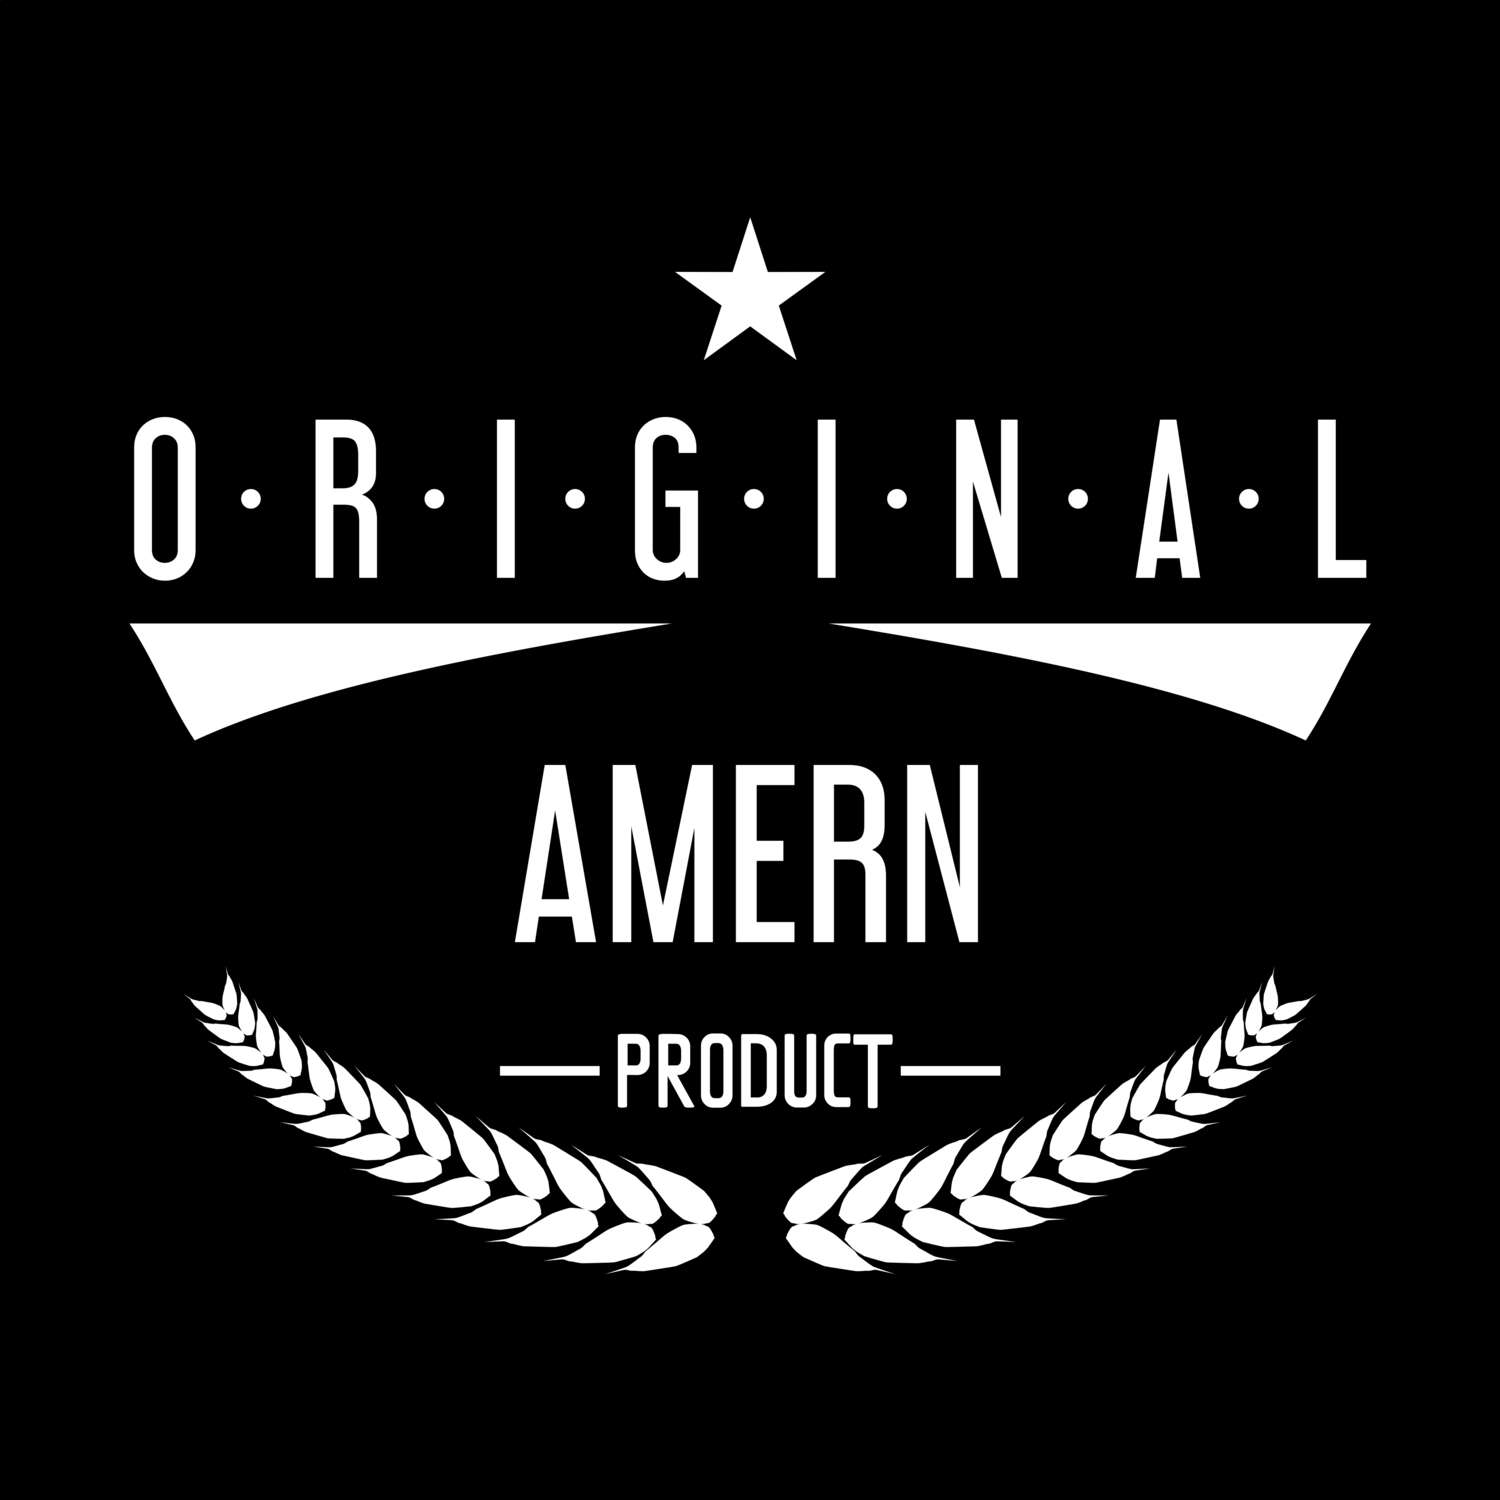 Amern T-Shirt »Original Product«